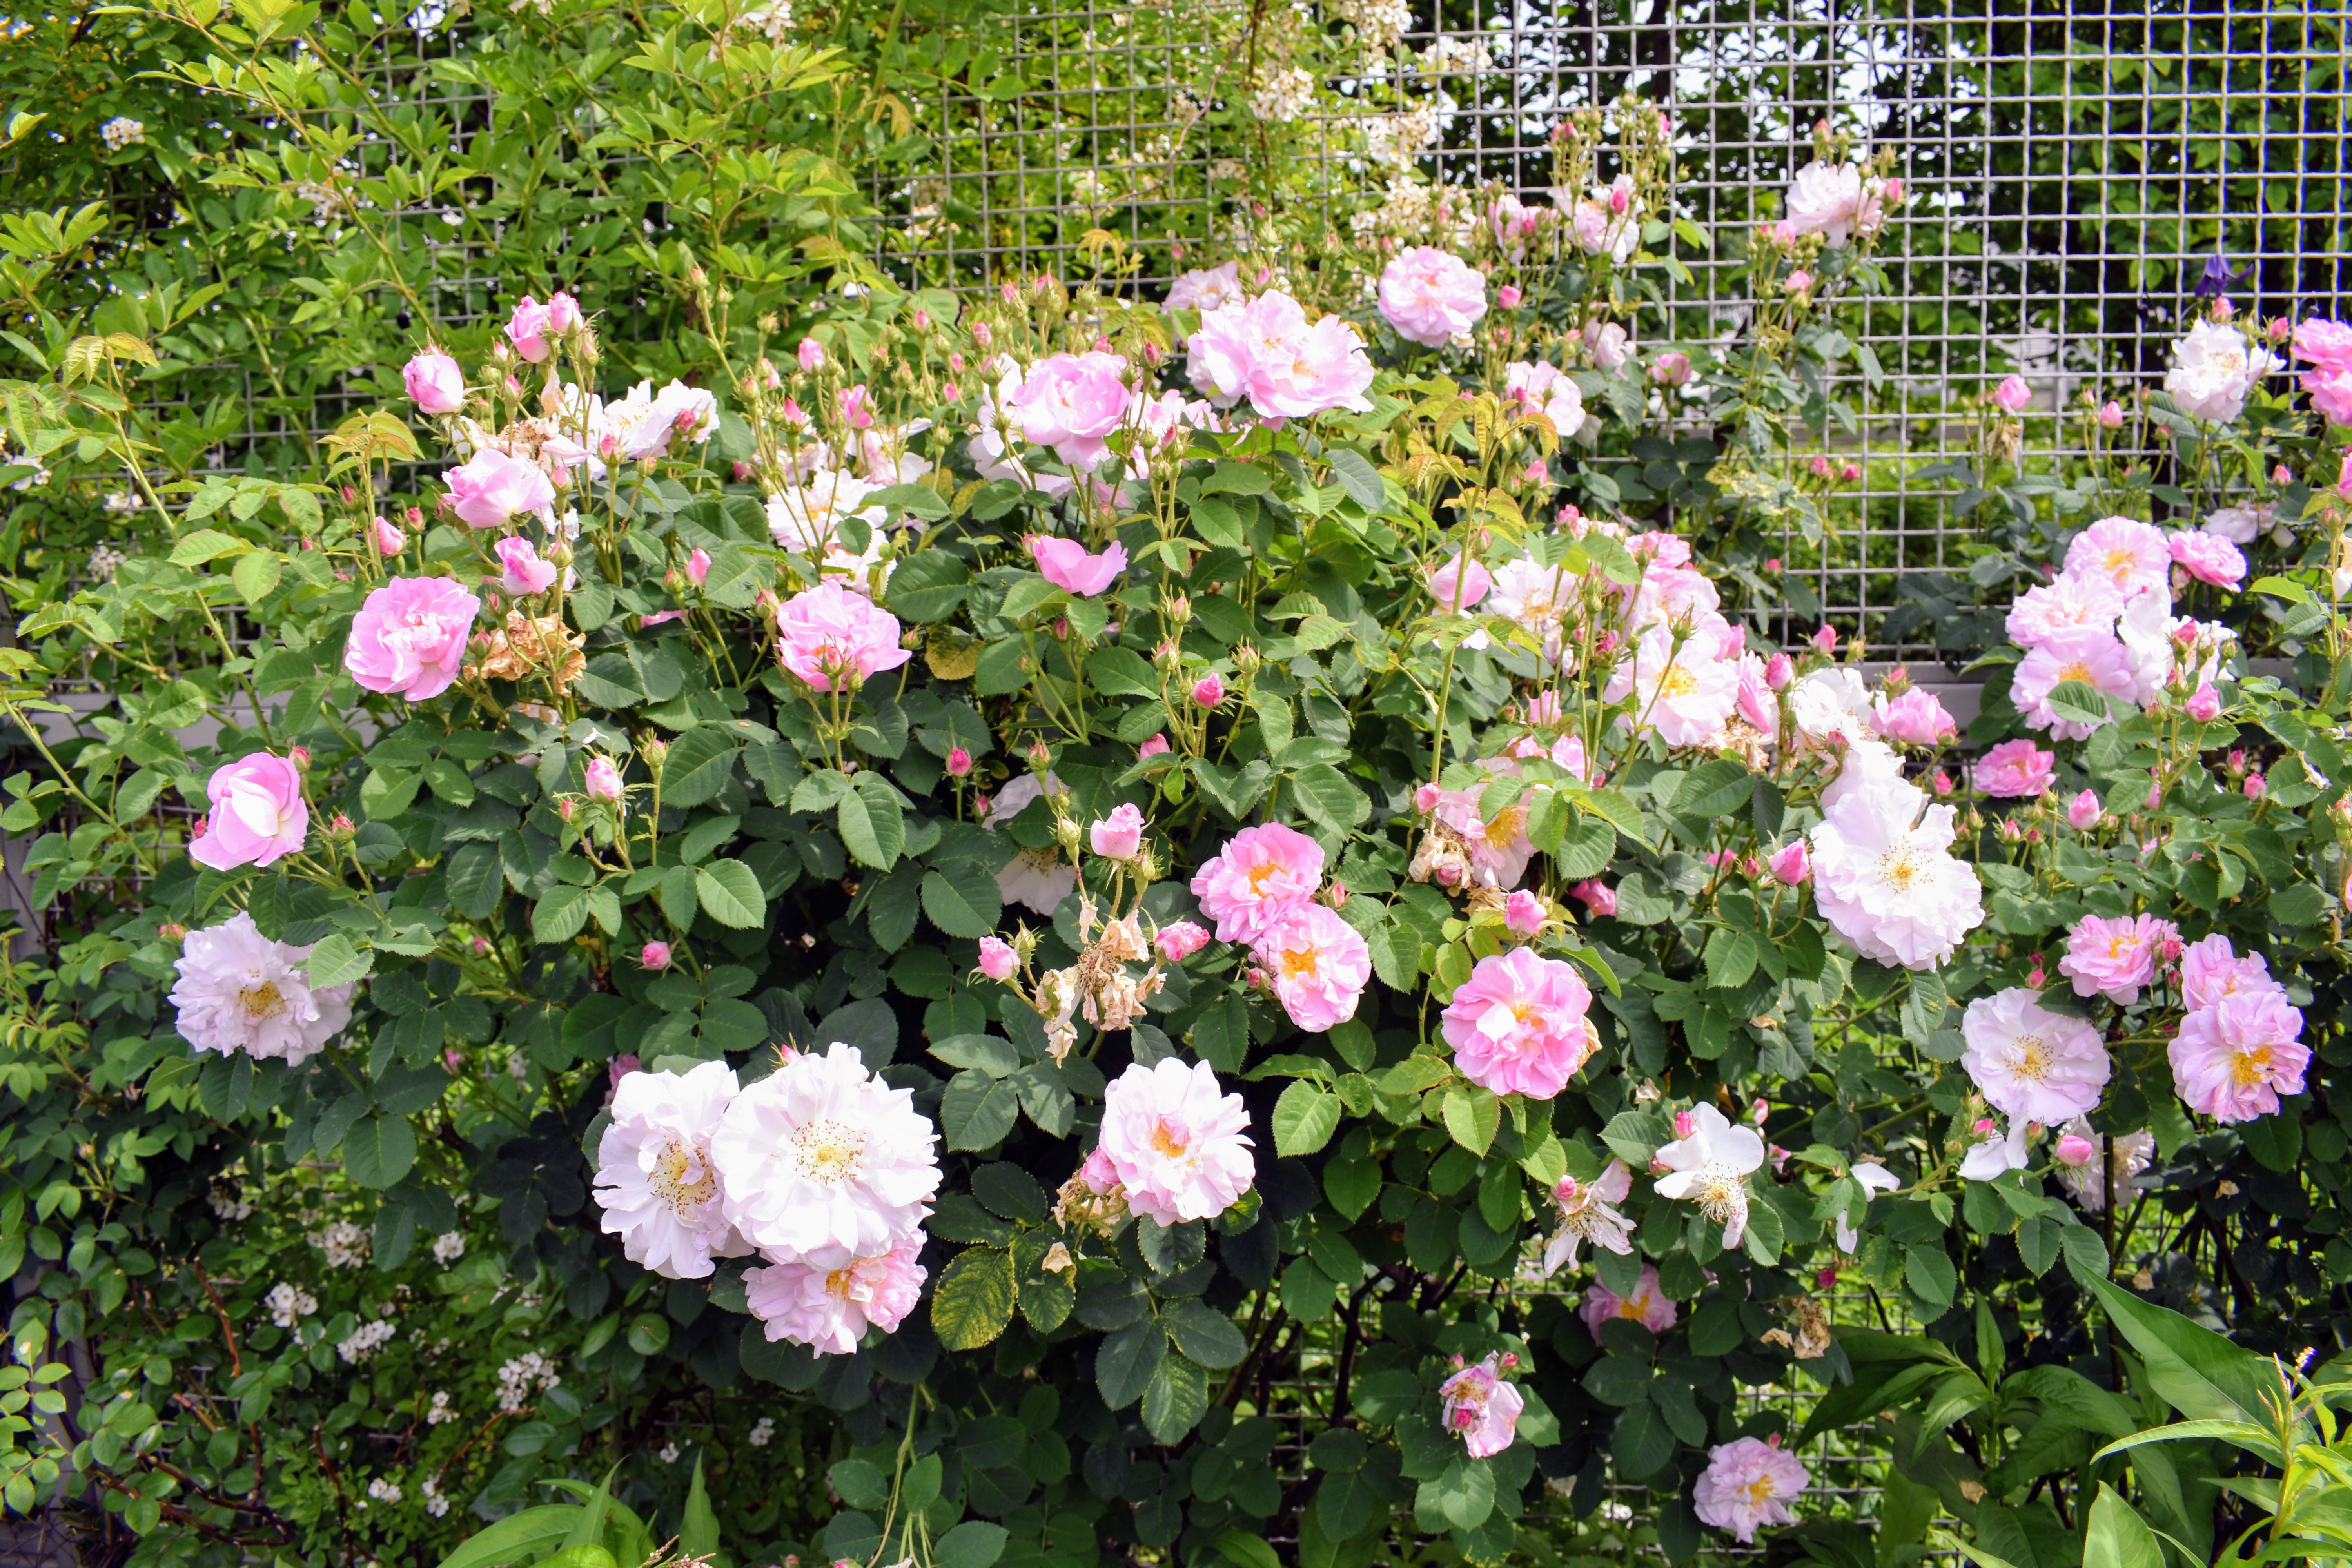 Blooming Roses at My Farm - The Martha Stewart Blog